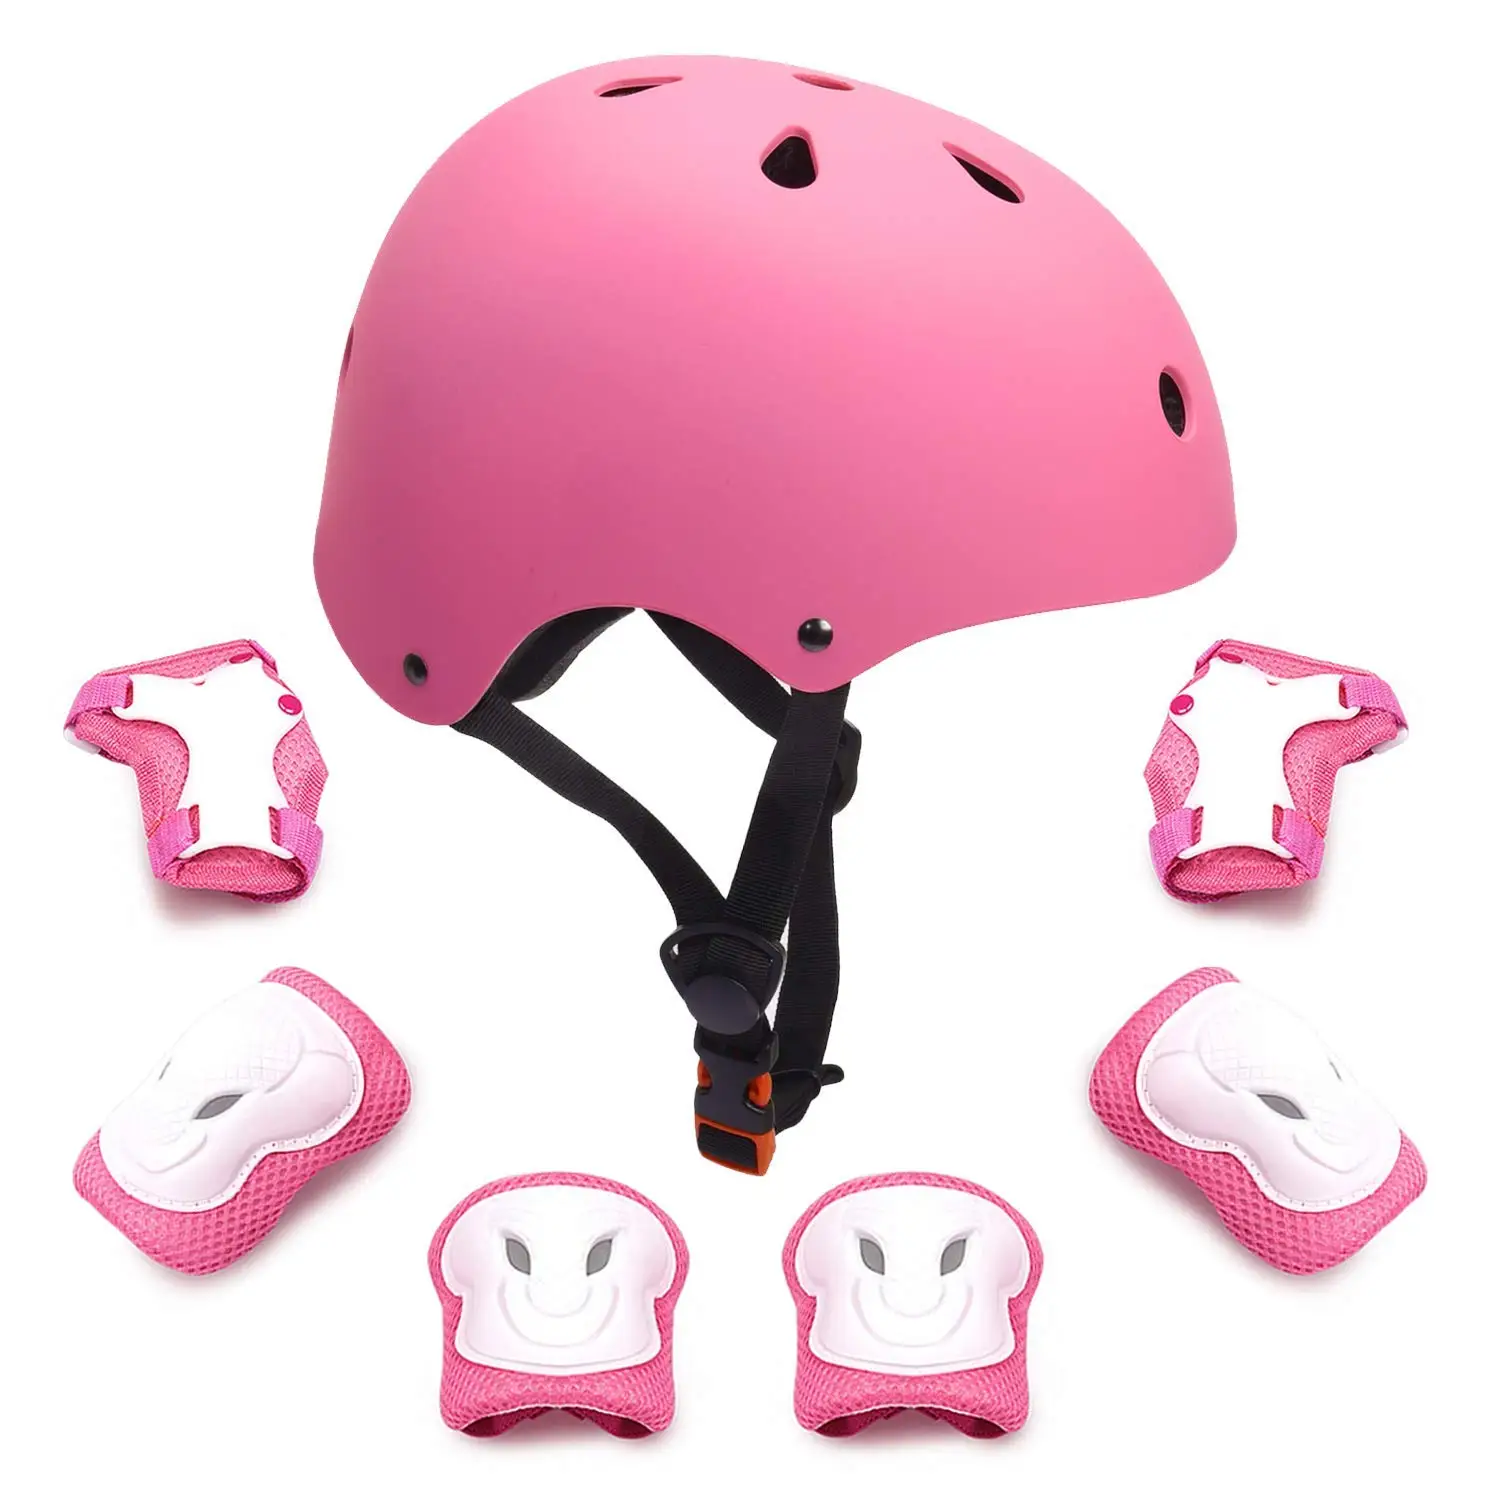 Cheap Girls Scooter Helmet Find Girls Scooter Helmet Deals On Line At Alibaba Com